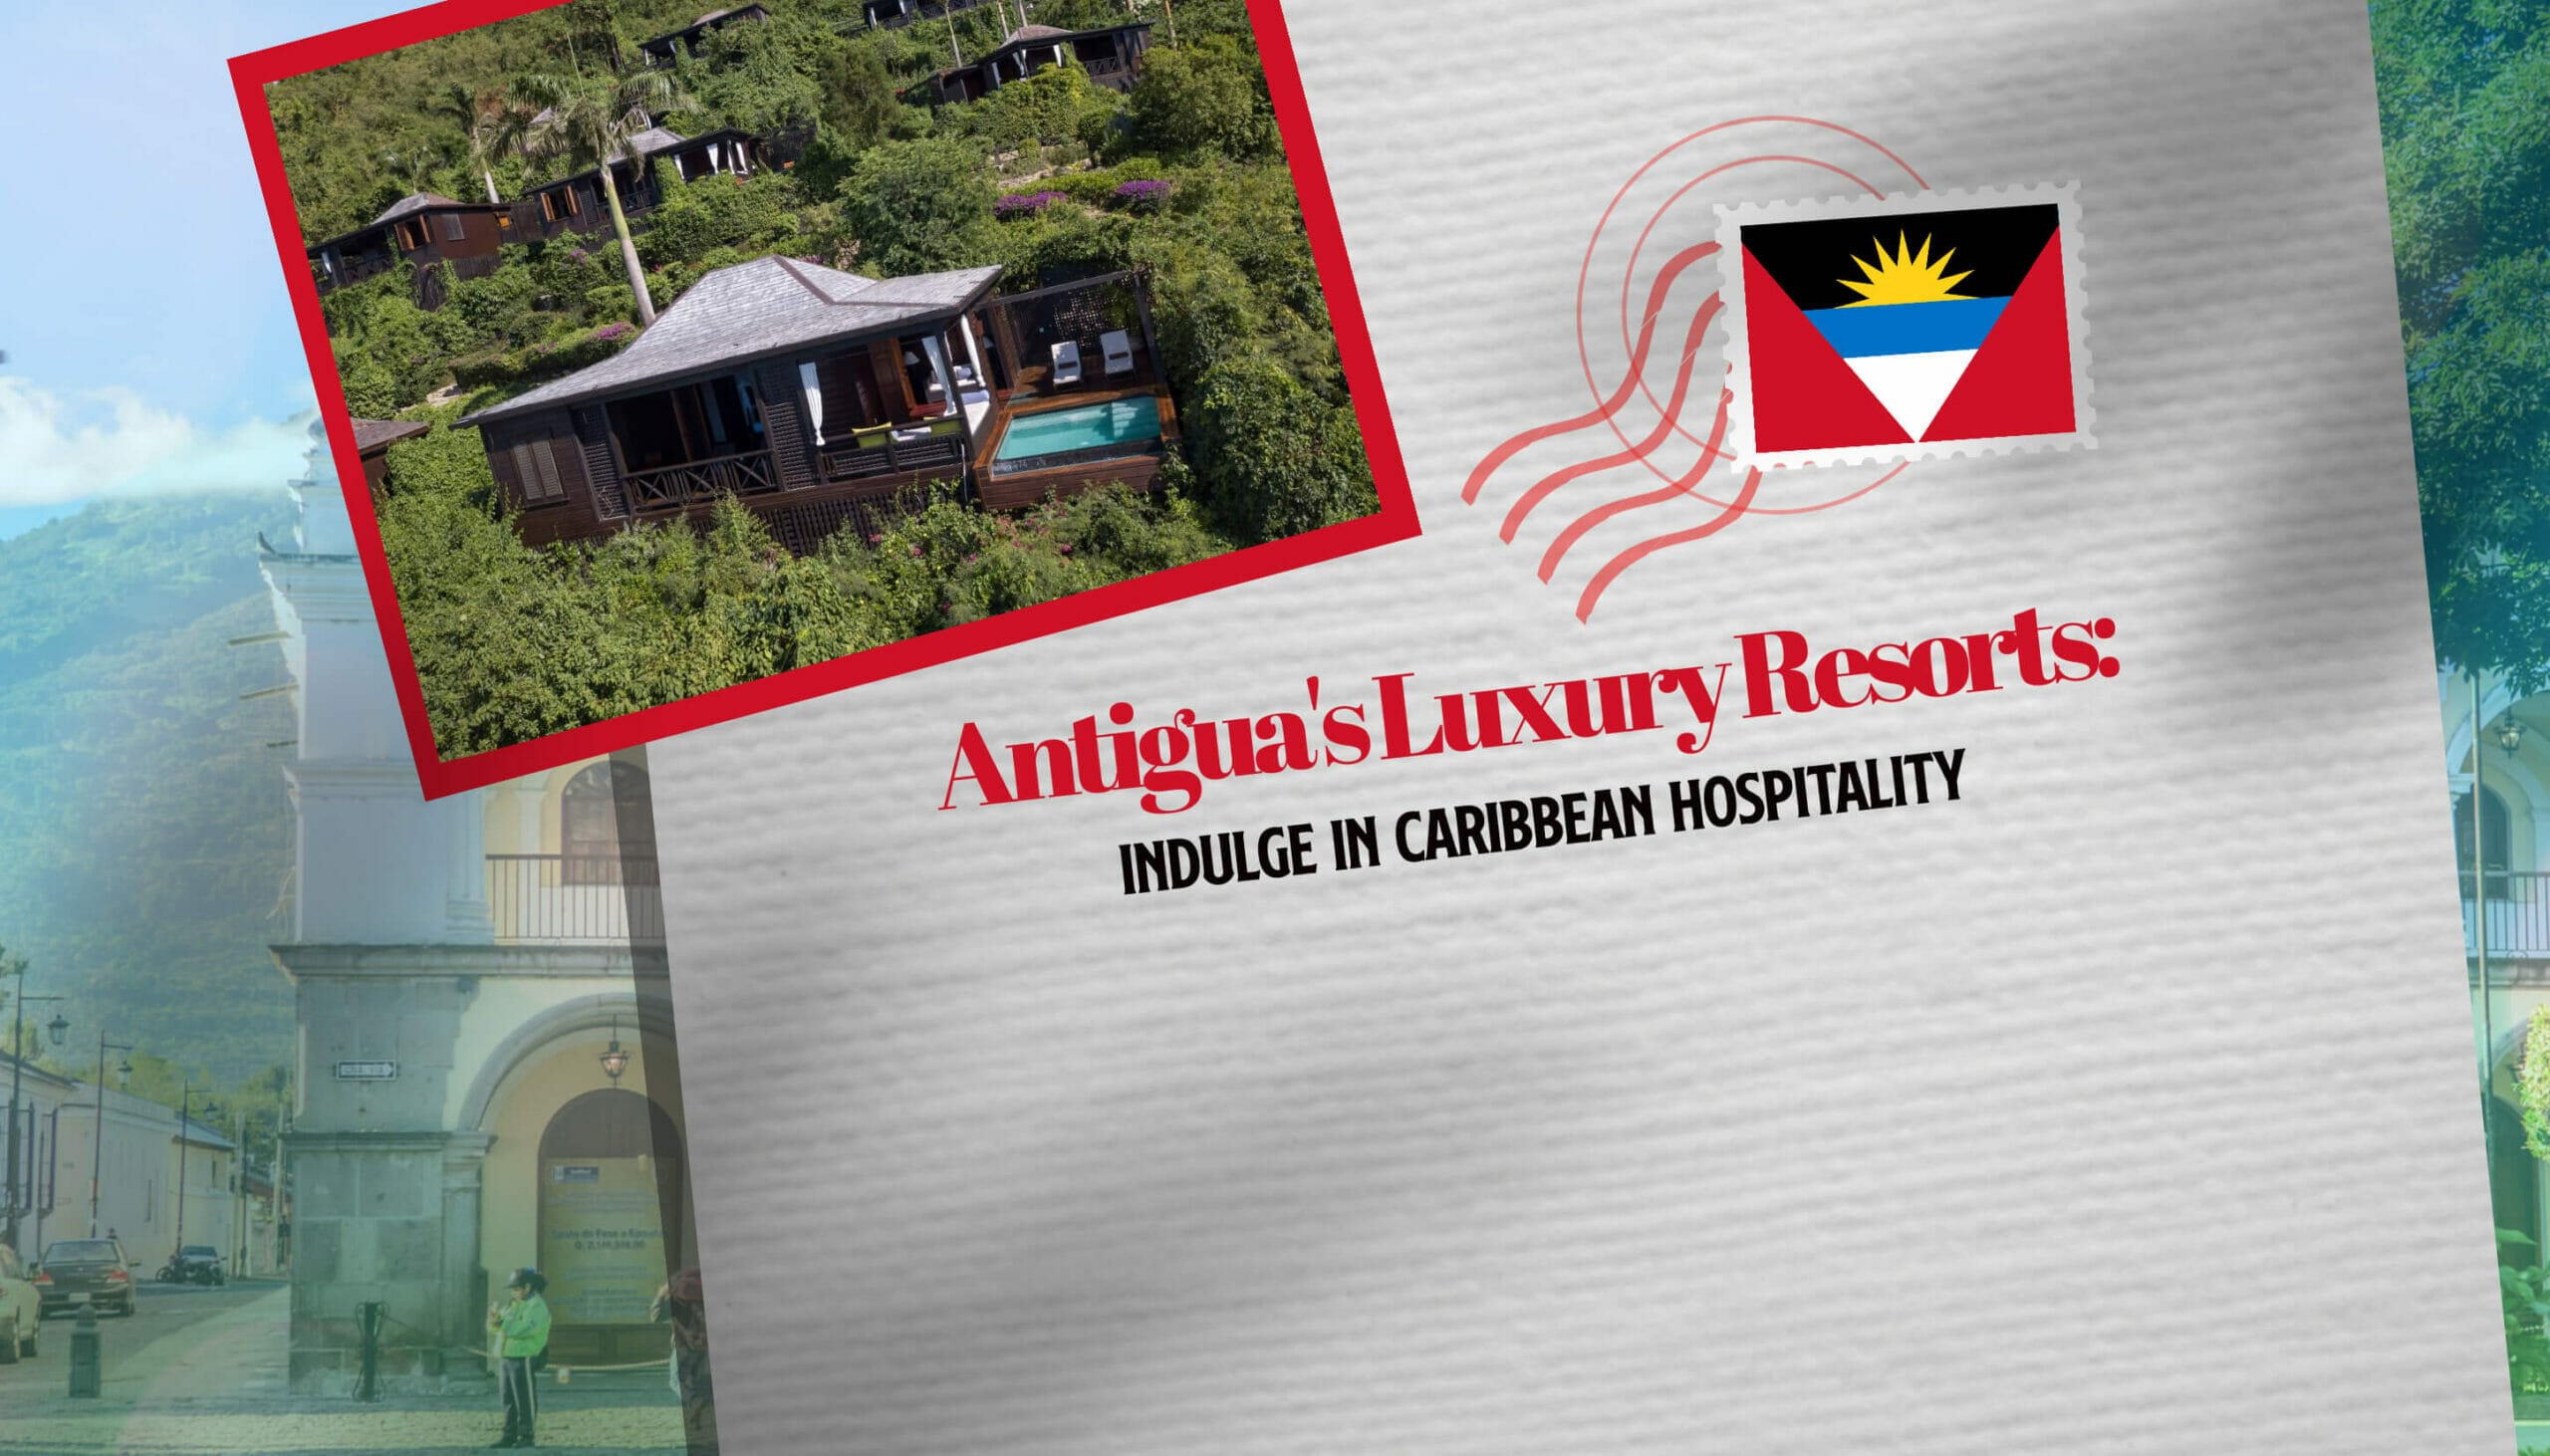 Antigua's Luxury Resorts Indulge in Caribbean Hospitality